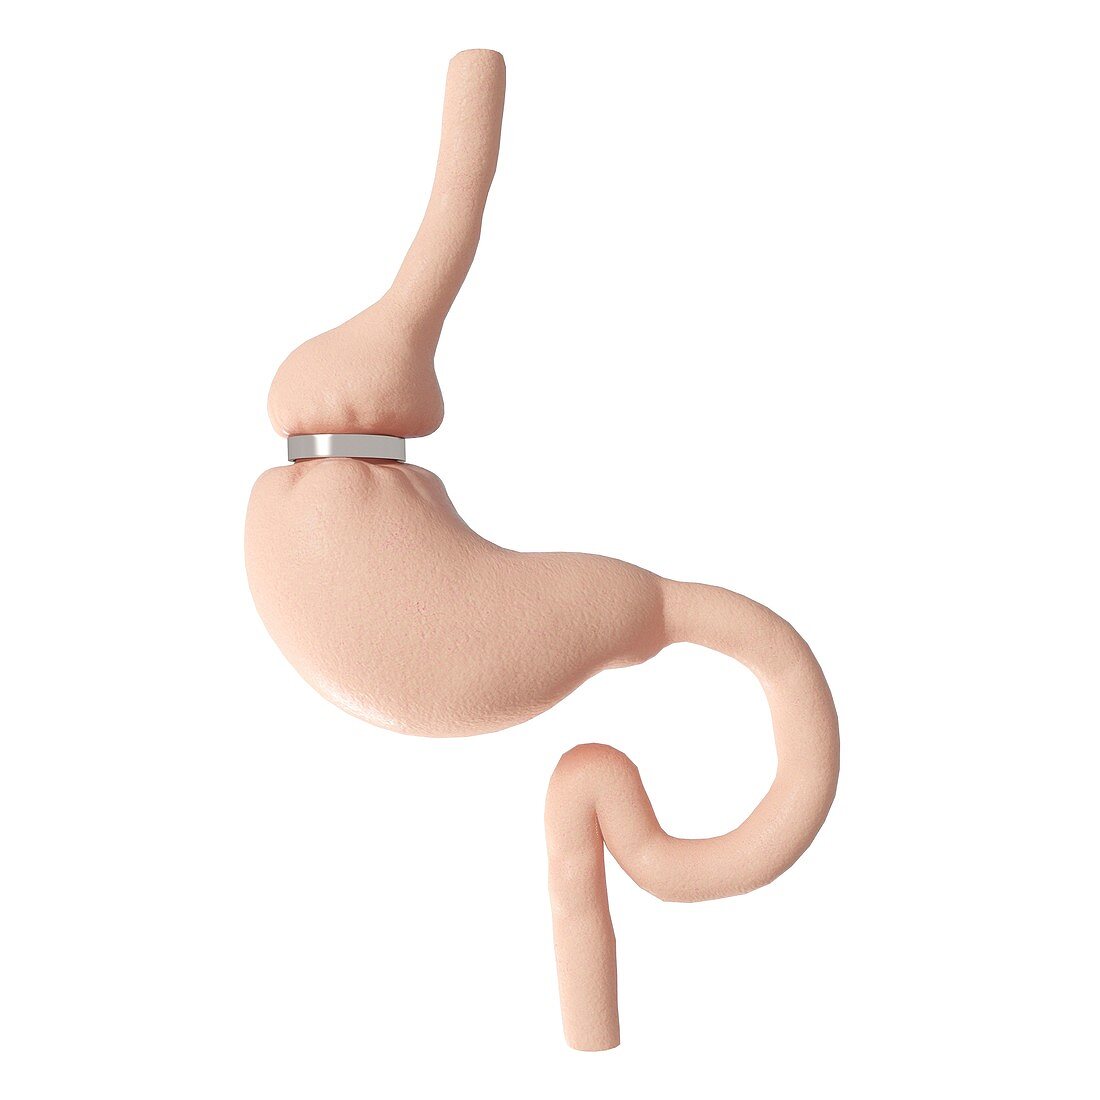 Illustration of gastric banding